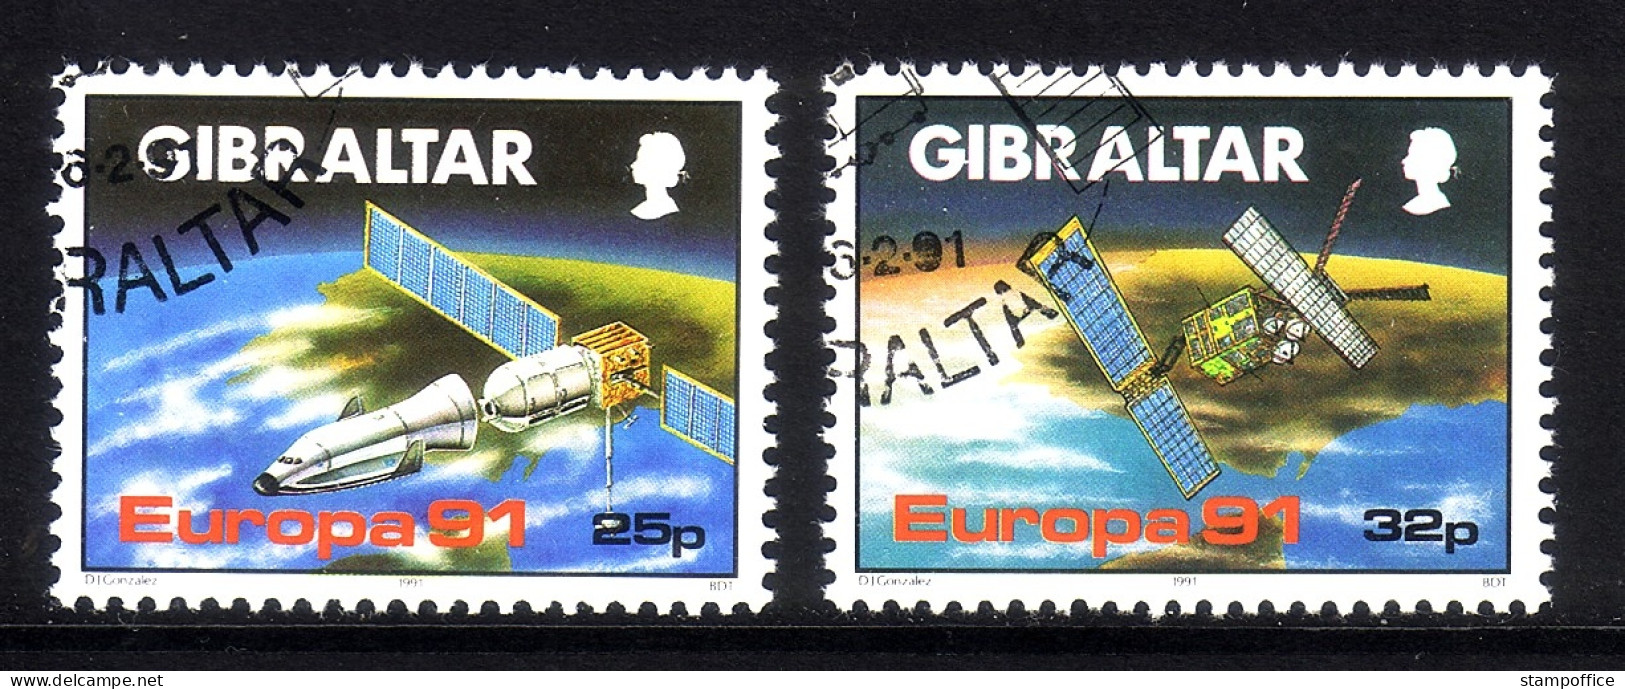 GIBRALTAR MI-NR. 613-614 O EUROPA 1991 - EUROPÄISCHE WELTRAUMFAHRT - 1991